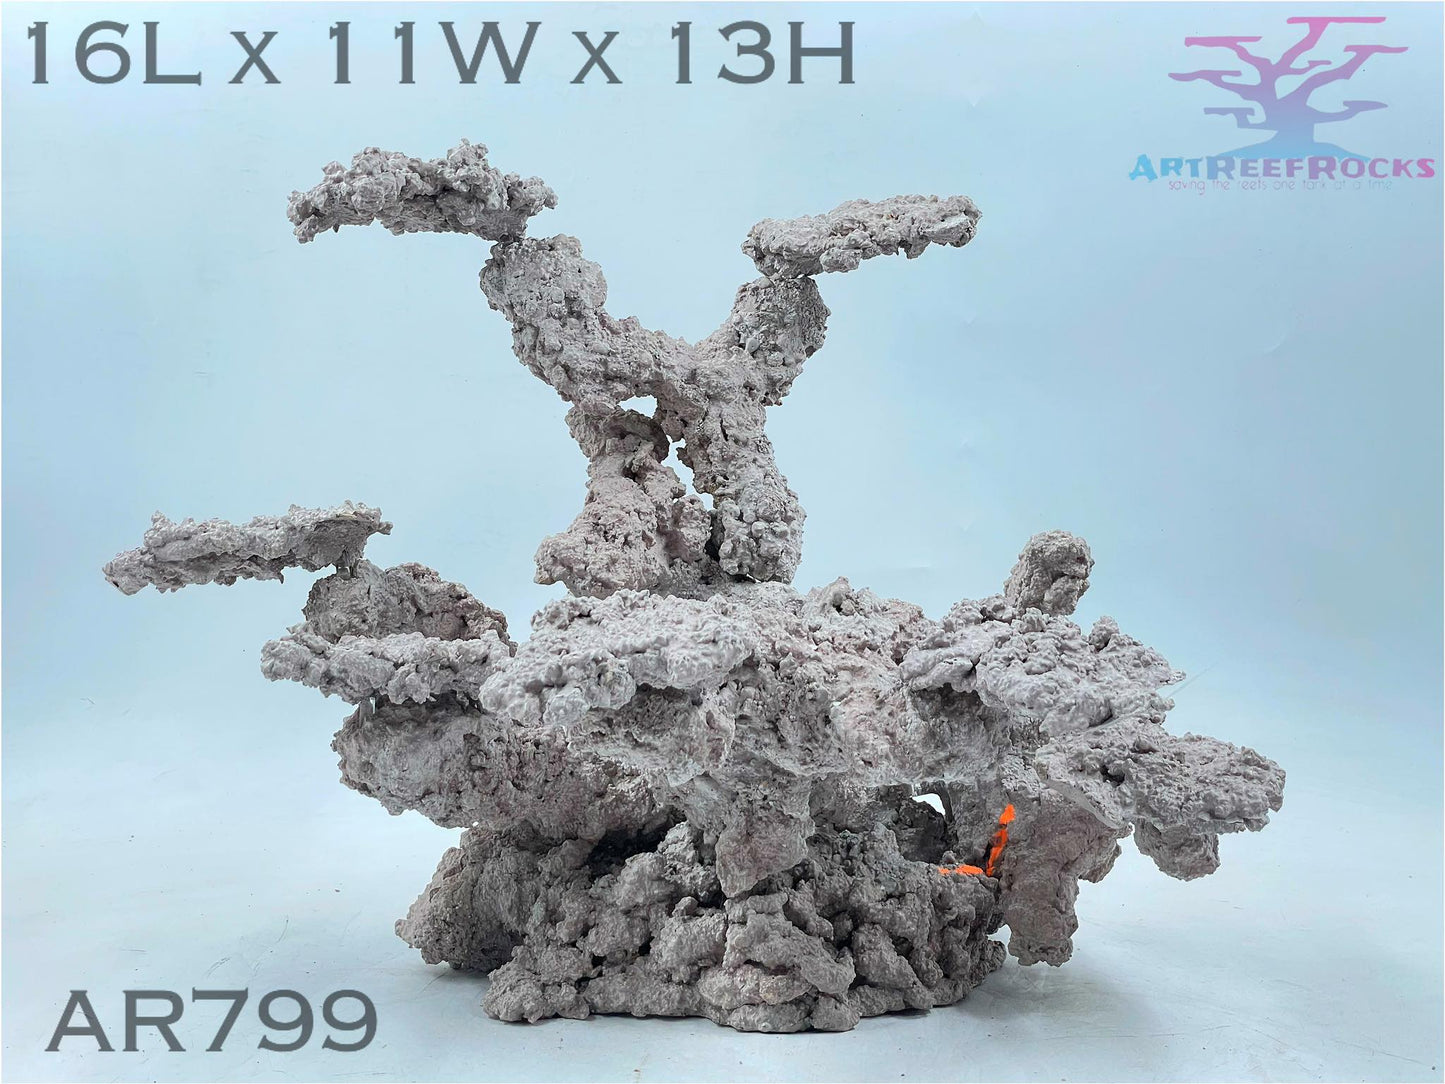 Sold Medium Art Reef Rock Structure WYSIWYG